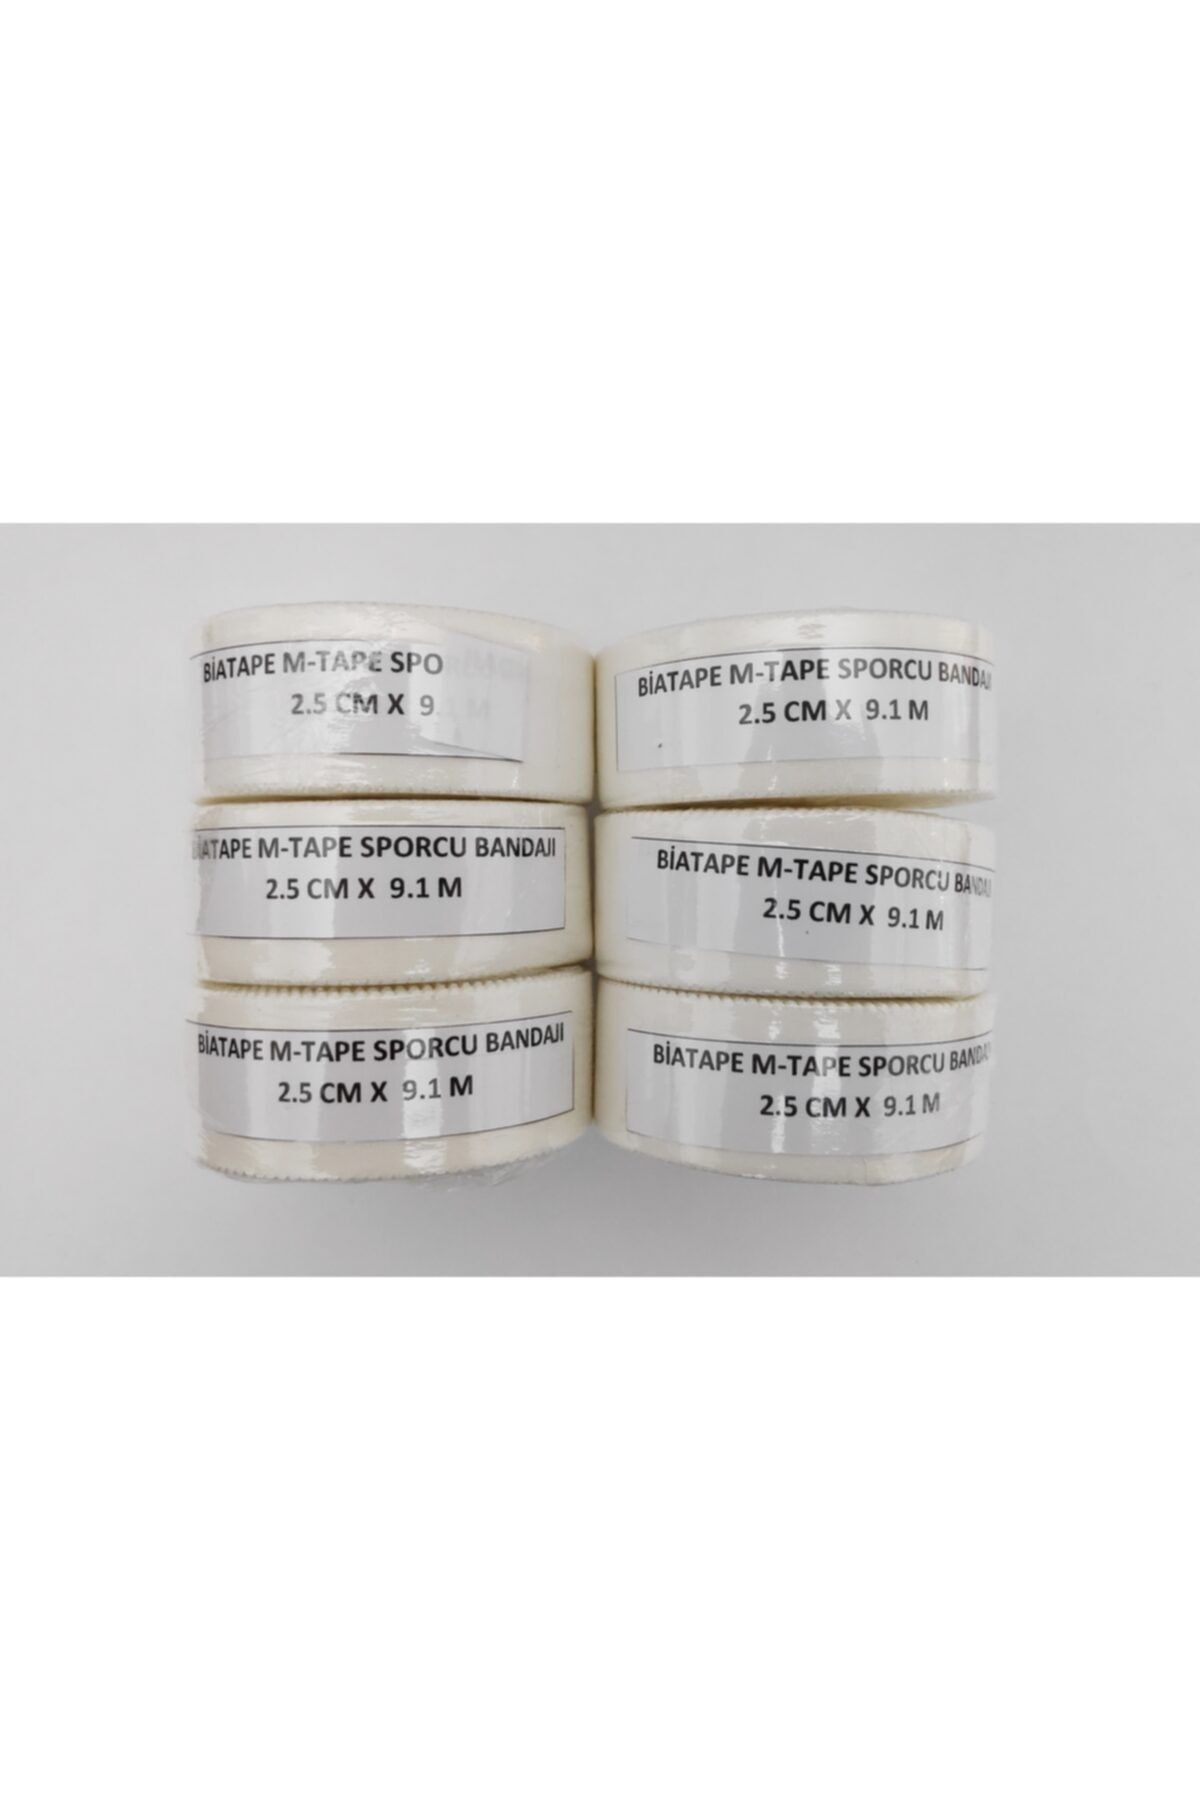 BiaTape M-tape Sporcu Bandajı 6 Adet (2,5 CM X 9 M DEN 6 ADET)